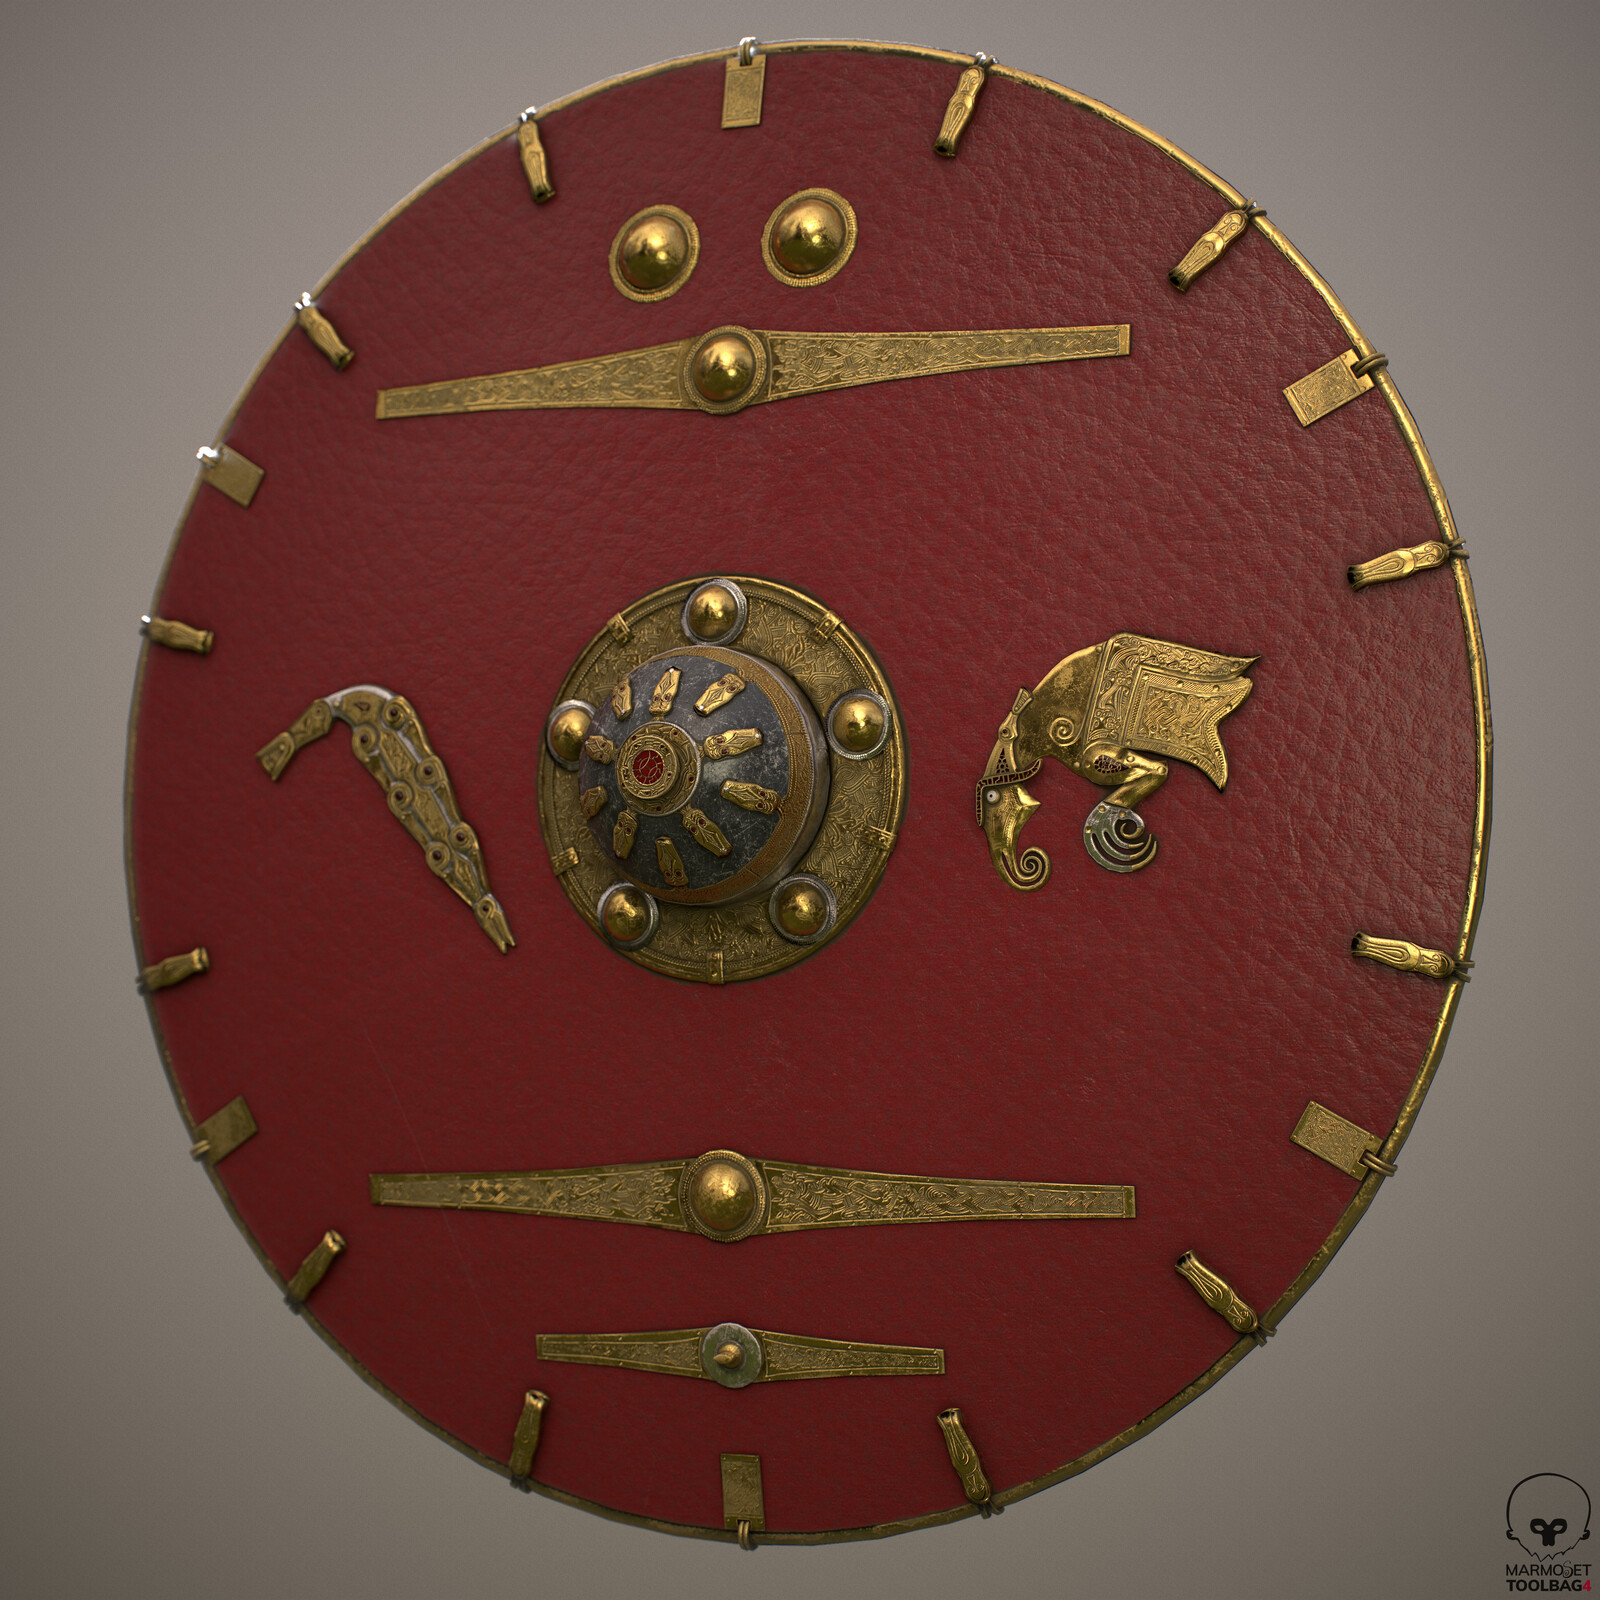 King Rædwald's Shield (Realtime)